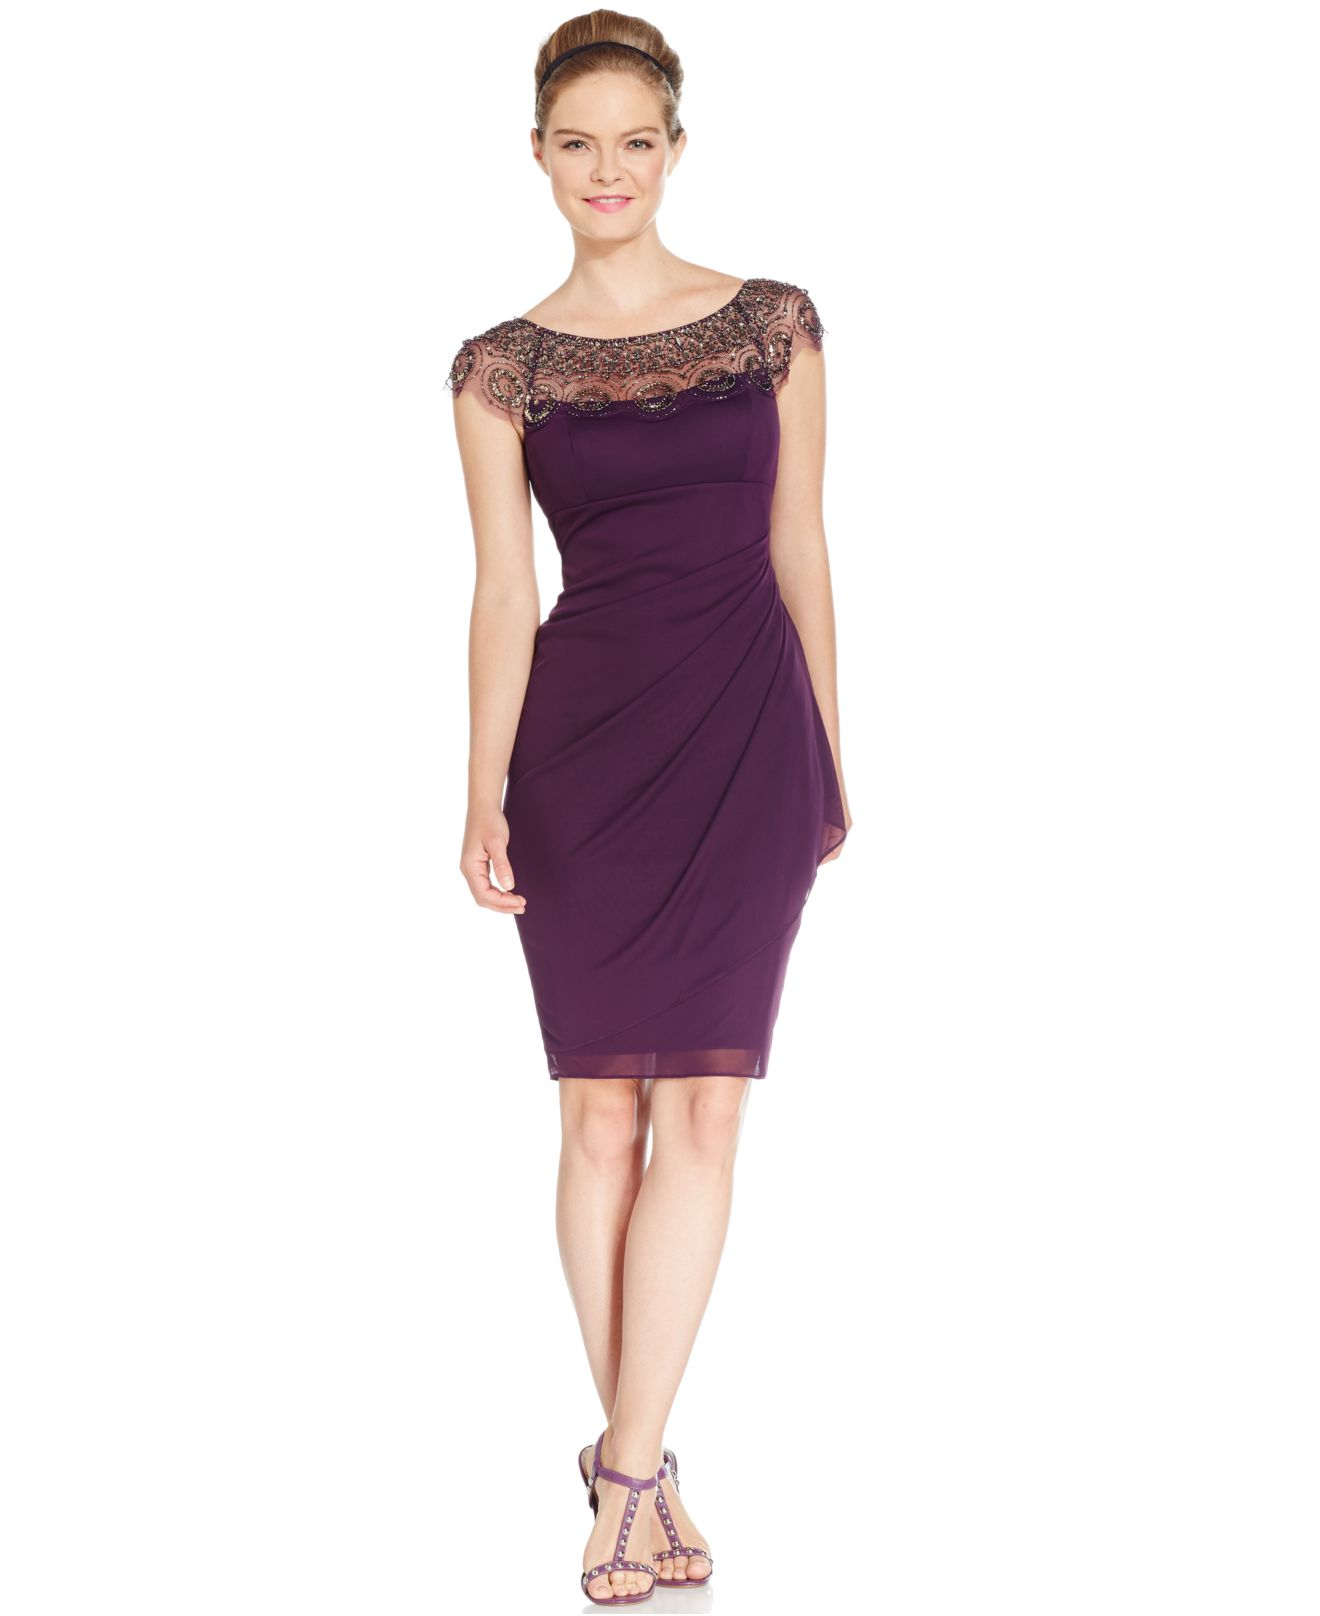 Xscape Cap-sleeve Illusion Beaded Dress in Plum/Antique (Purple) - Lyst